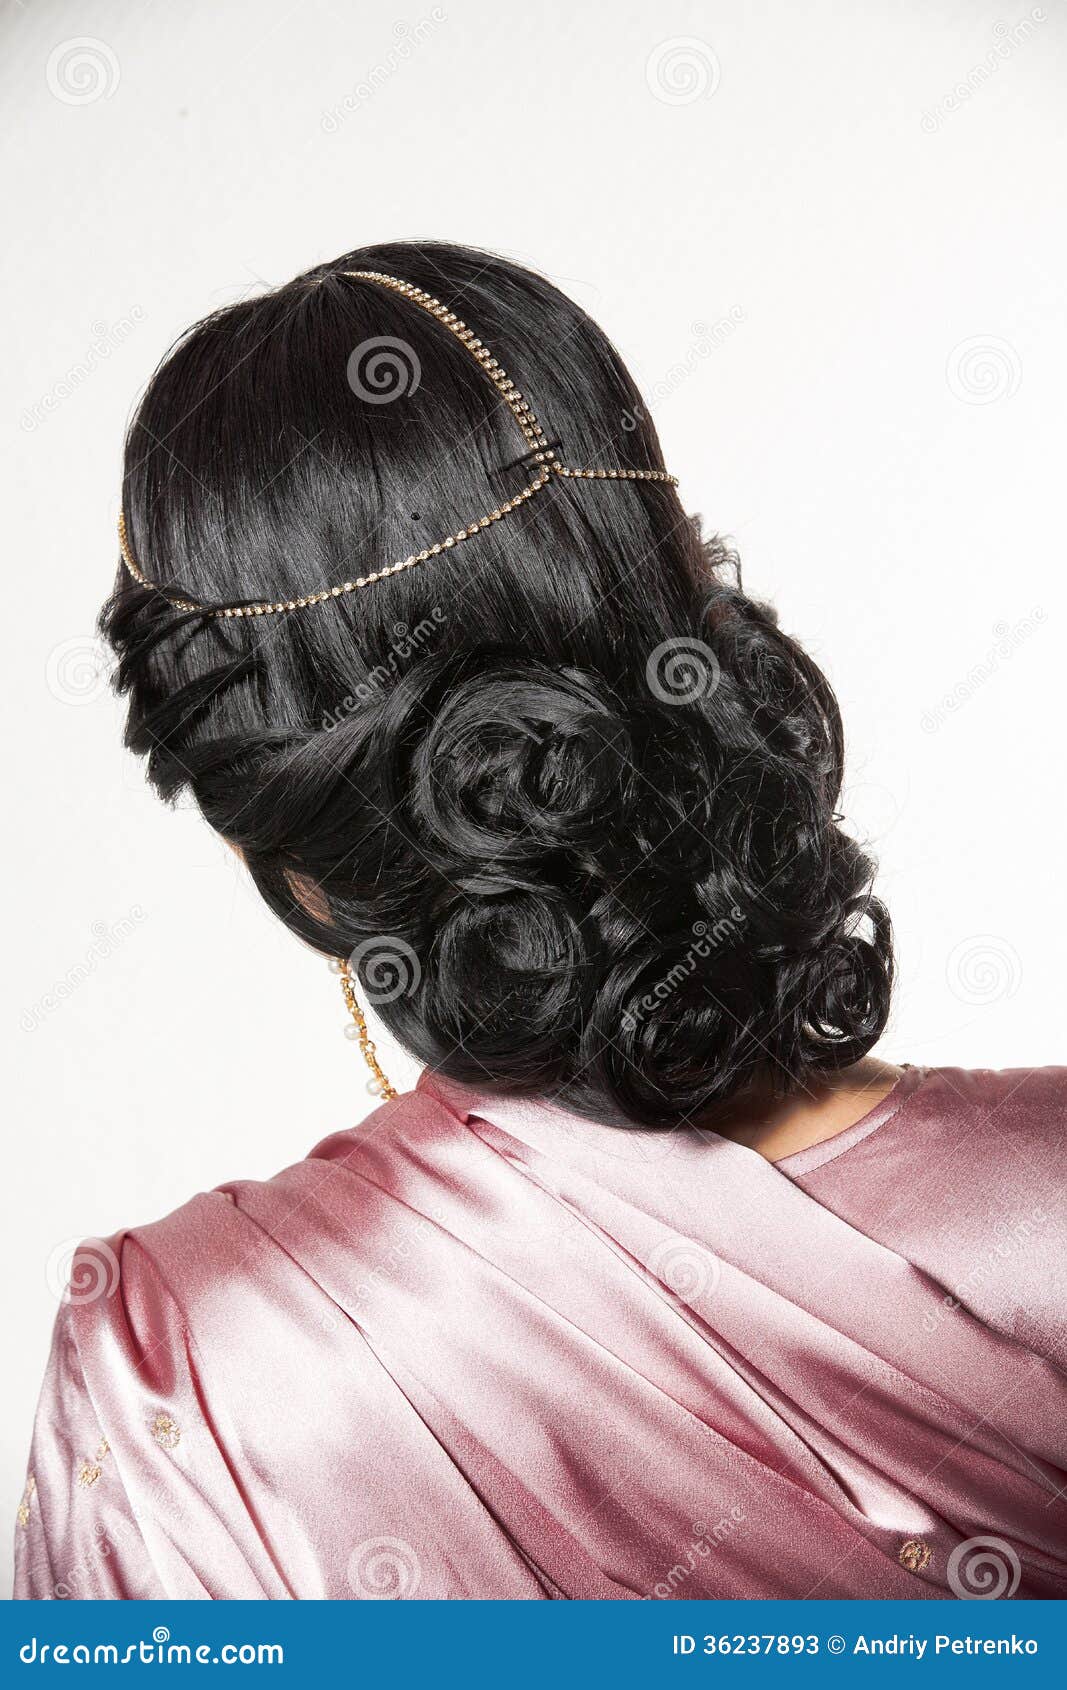 Hairstyle Beautiful Indian Girl Stock Image - Image of black, india:  36237893